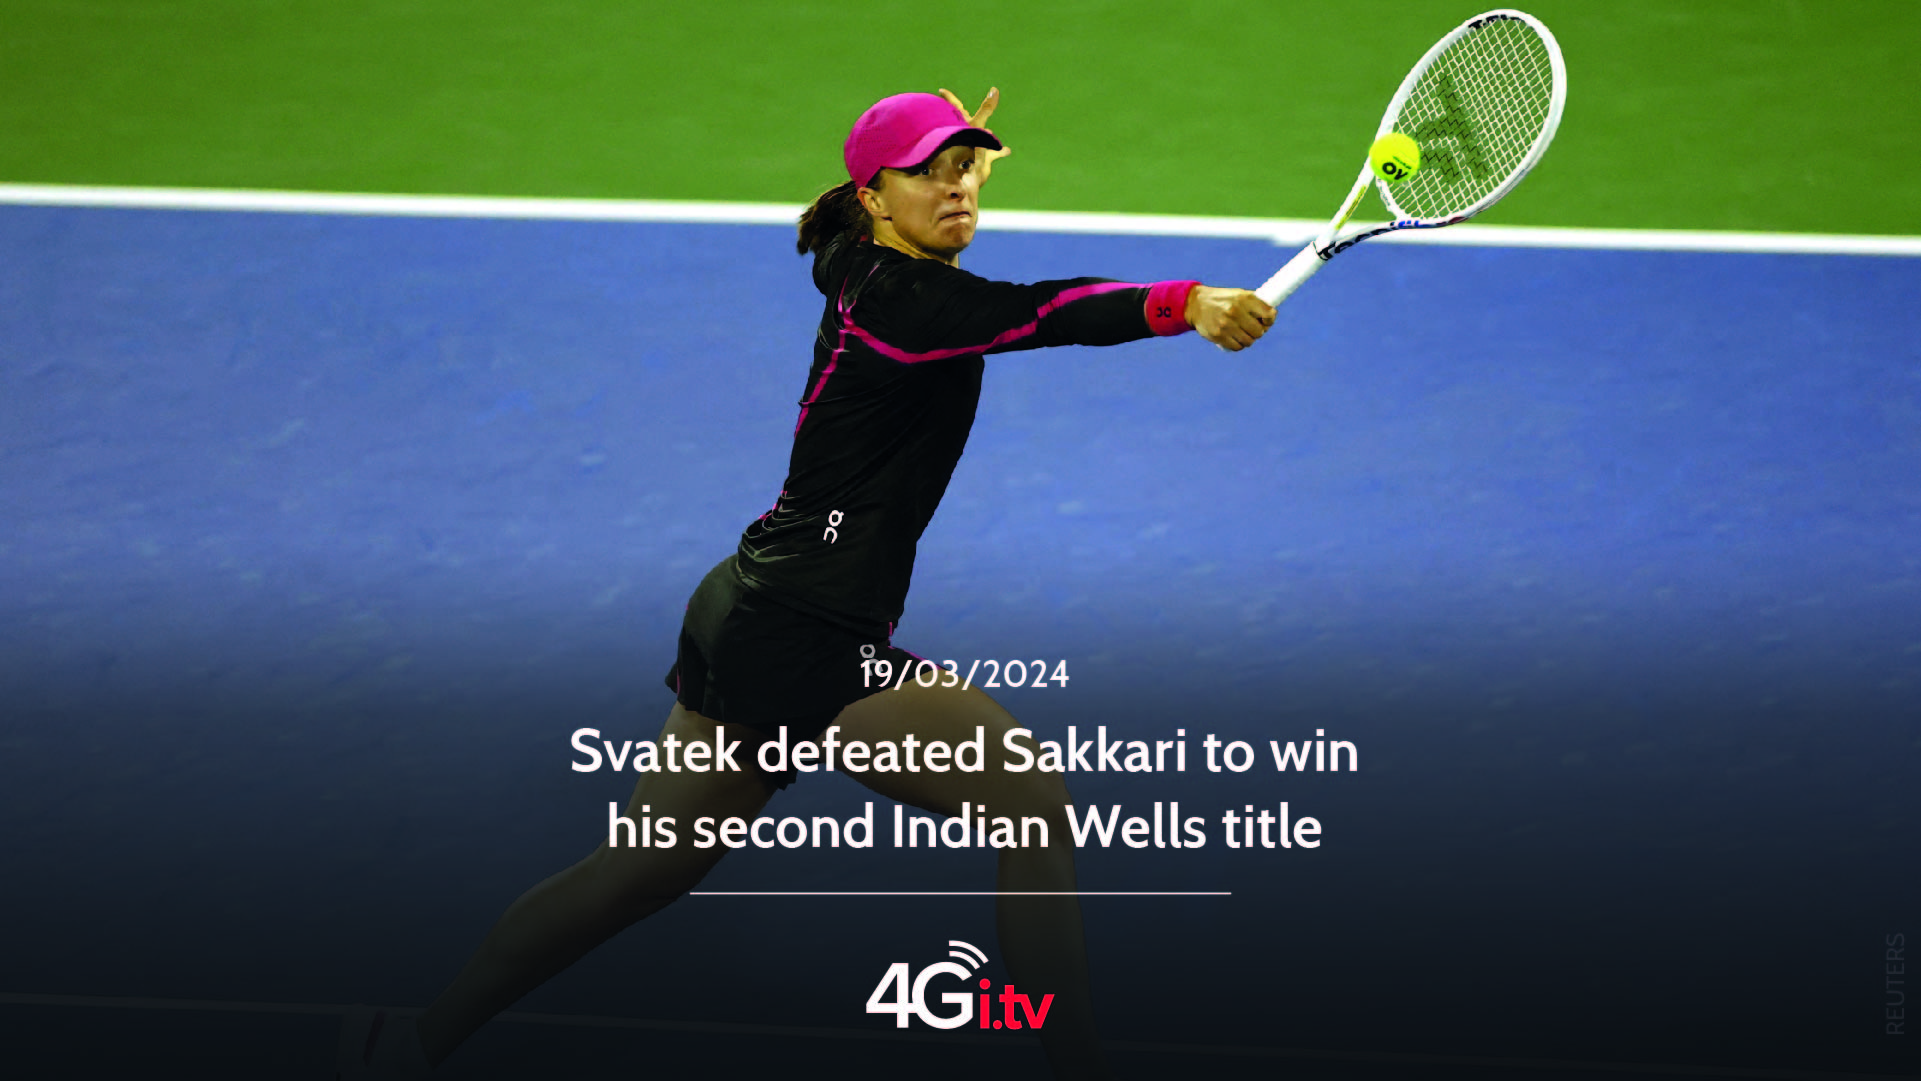 Lee más sobre el artículo Svatek defeated Sakkari to win his second Indian Wells title